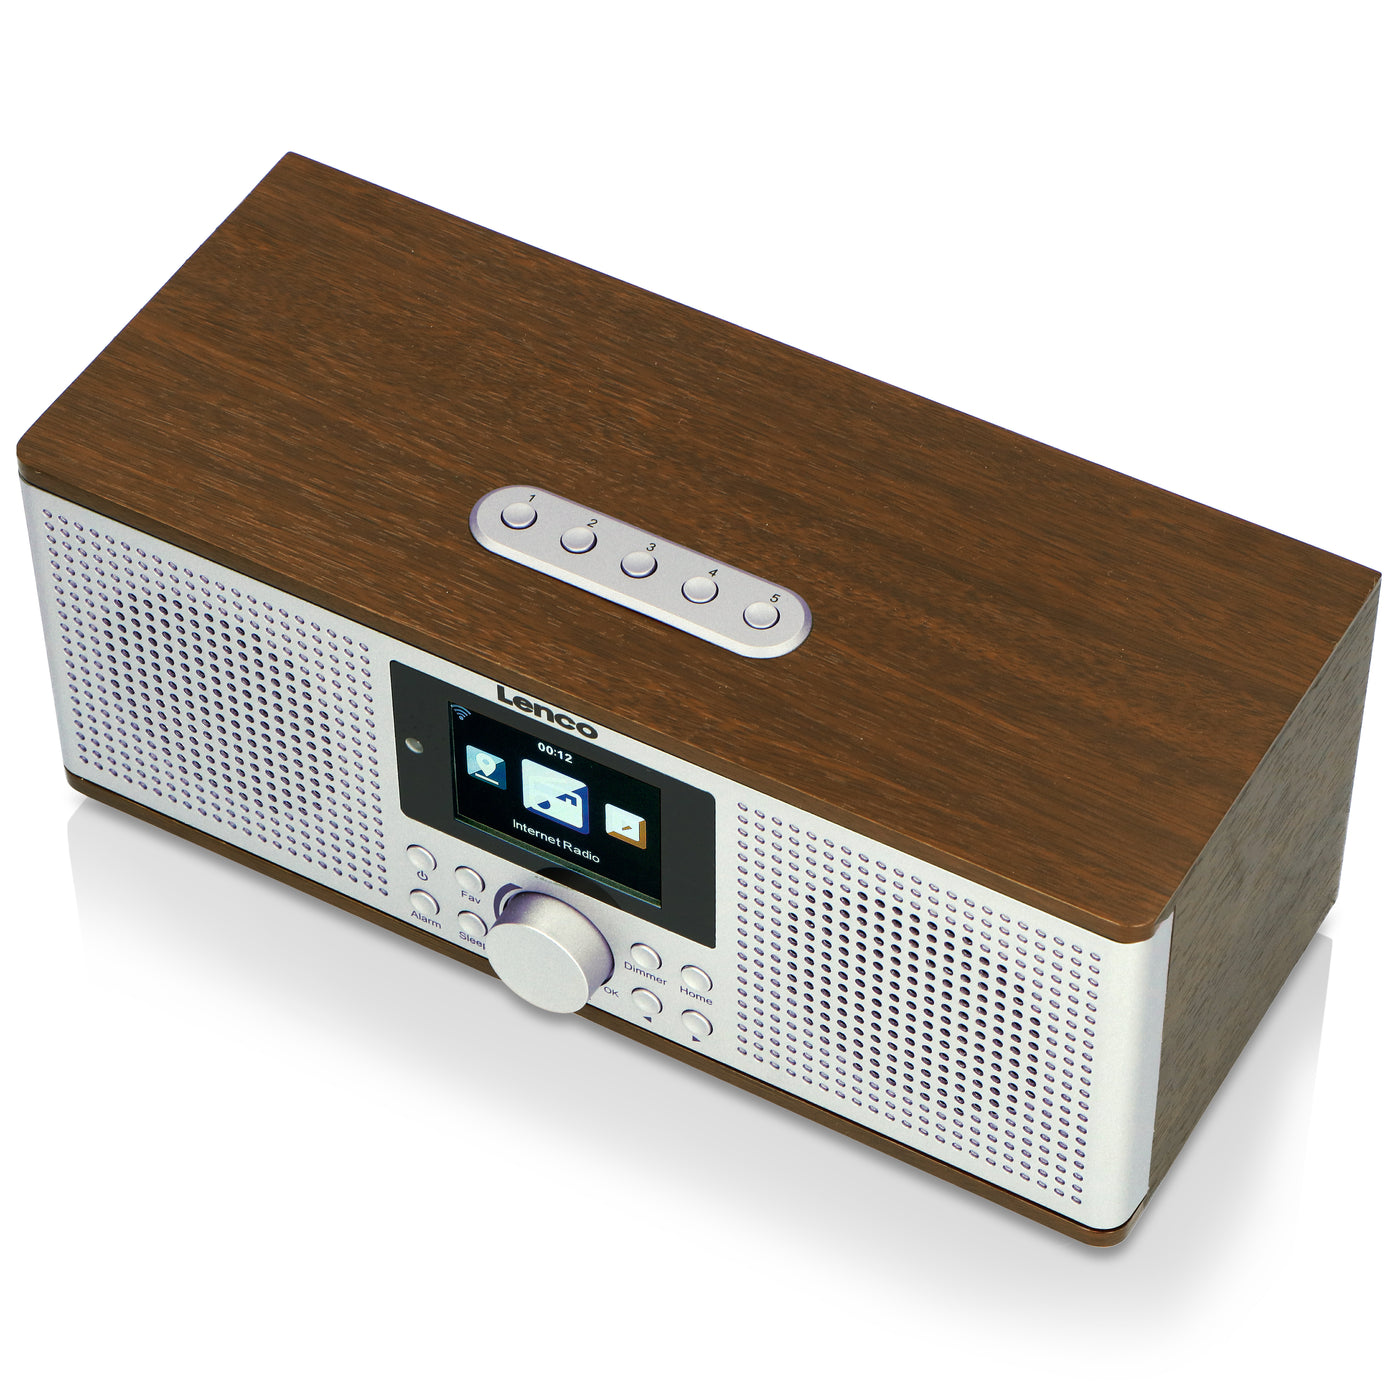 Internet – DAB+, and Lenco-Catalog Smart - FM radio, Bluetooth® W LENCO with DIR-170WA